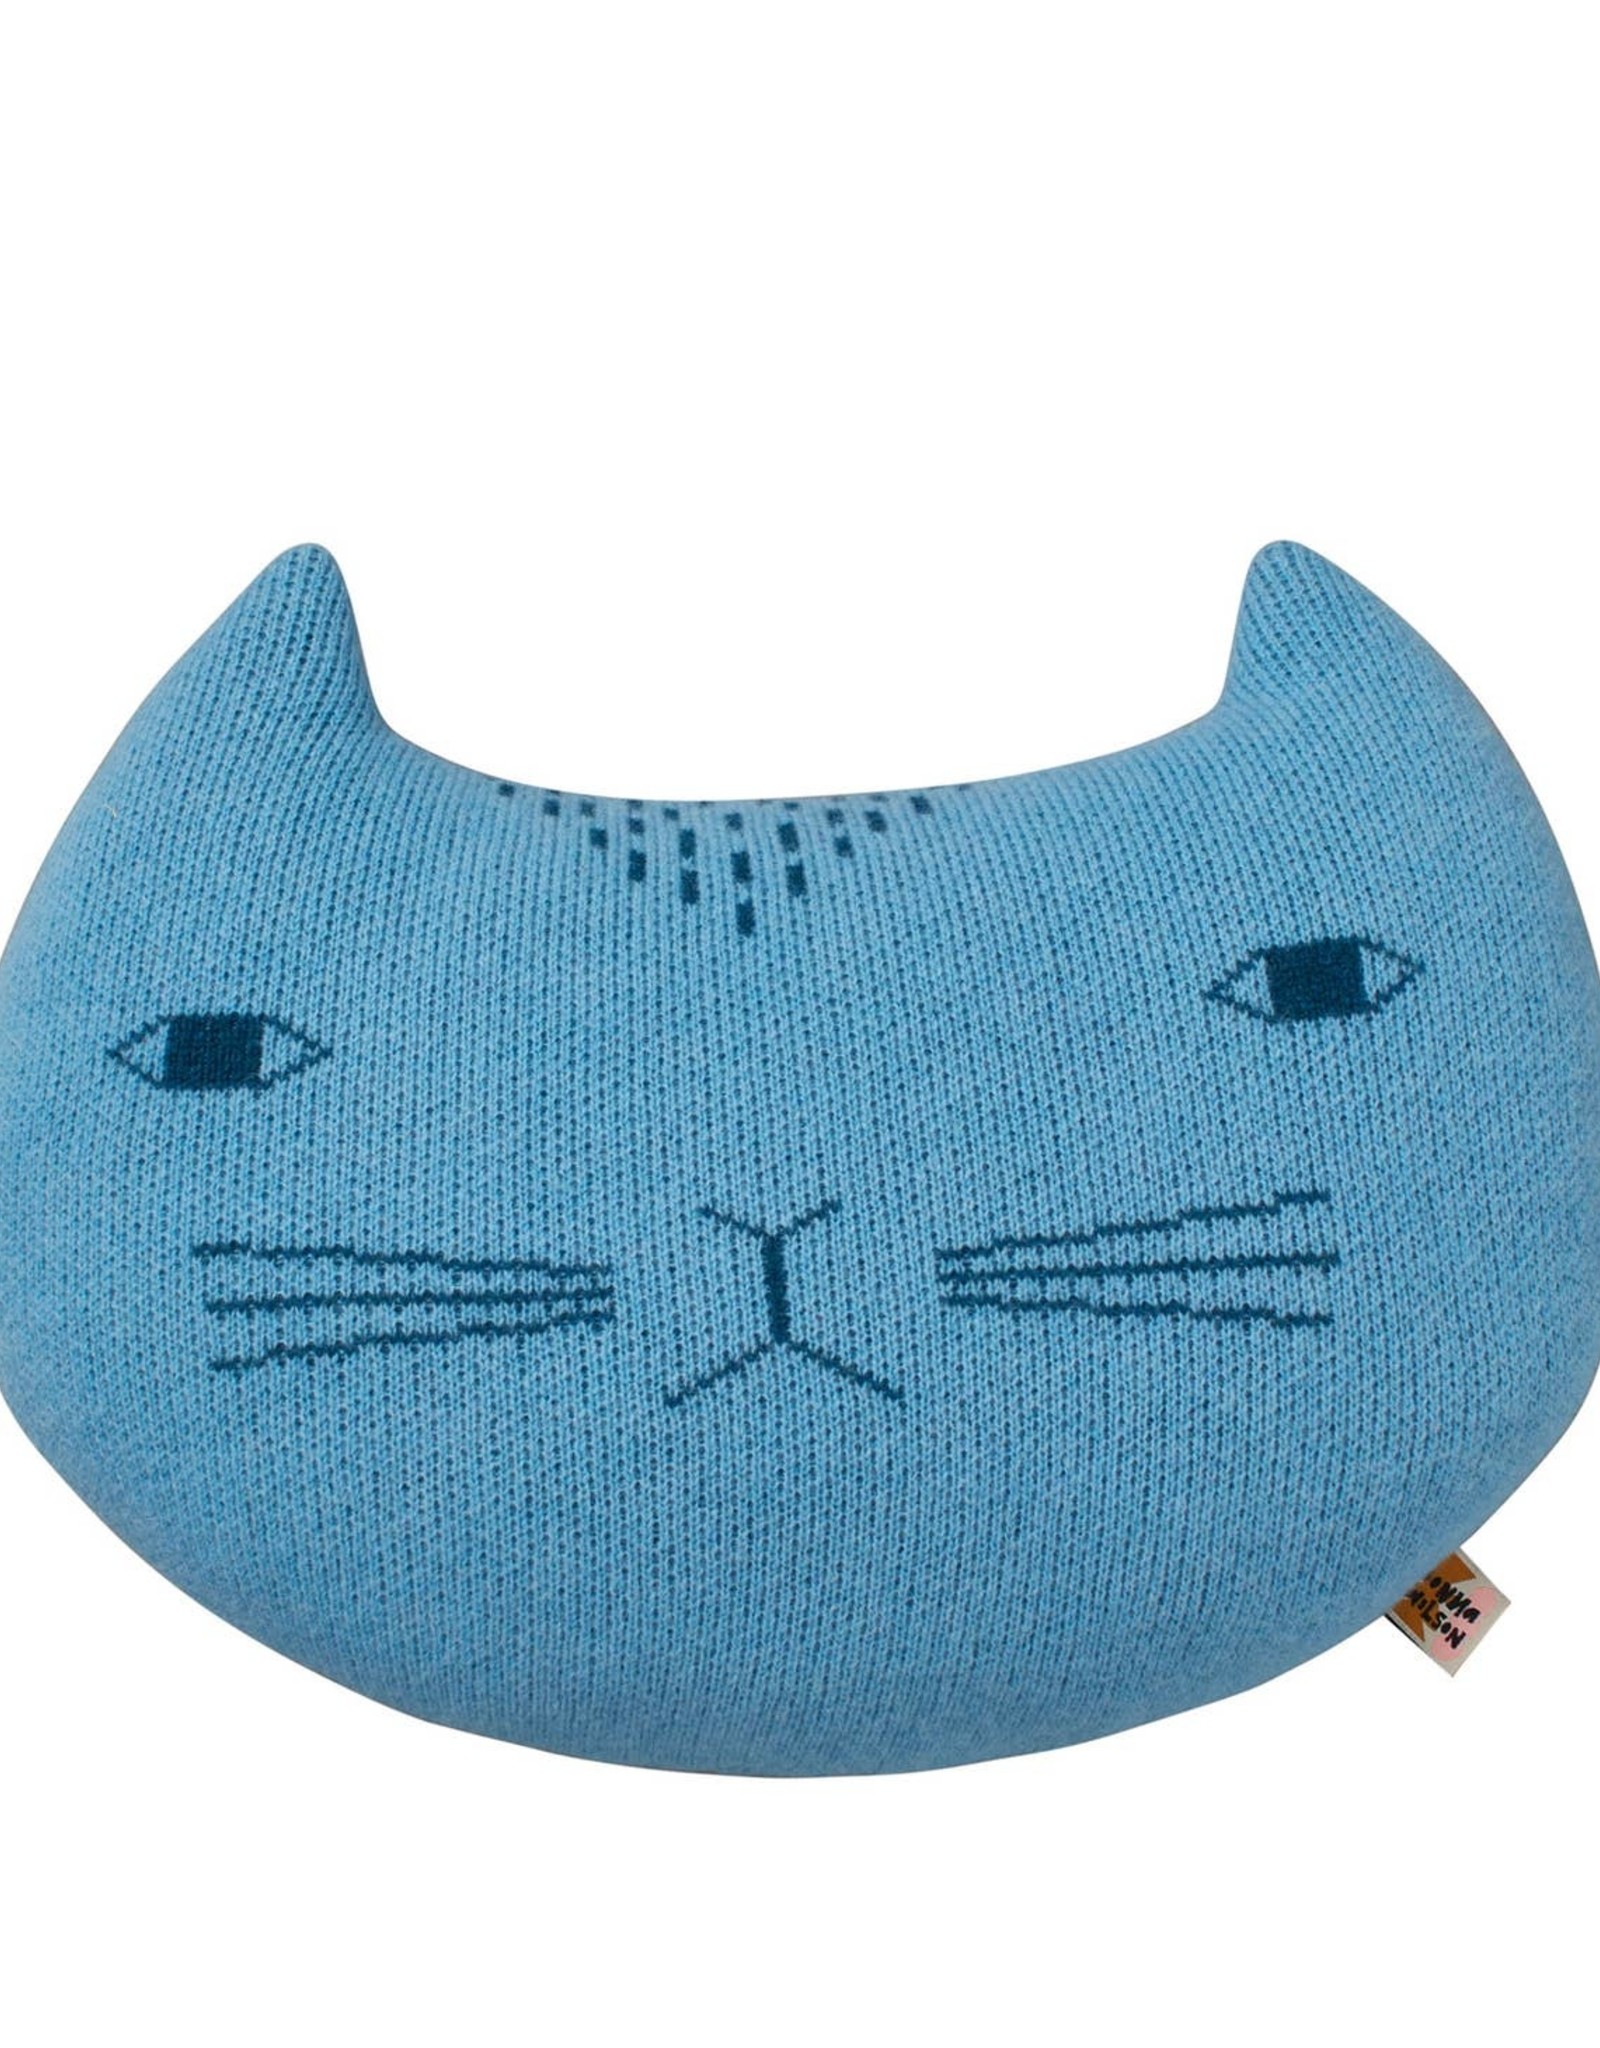 Donna Wilson - Cat Shaped Cushion